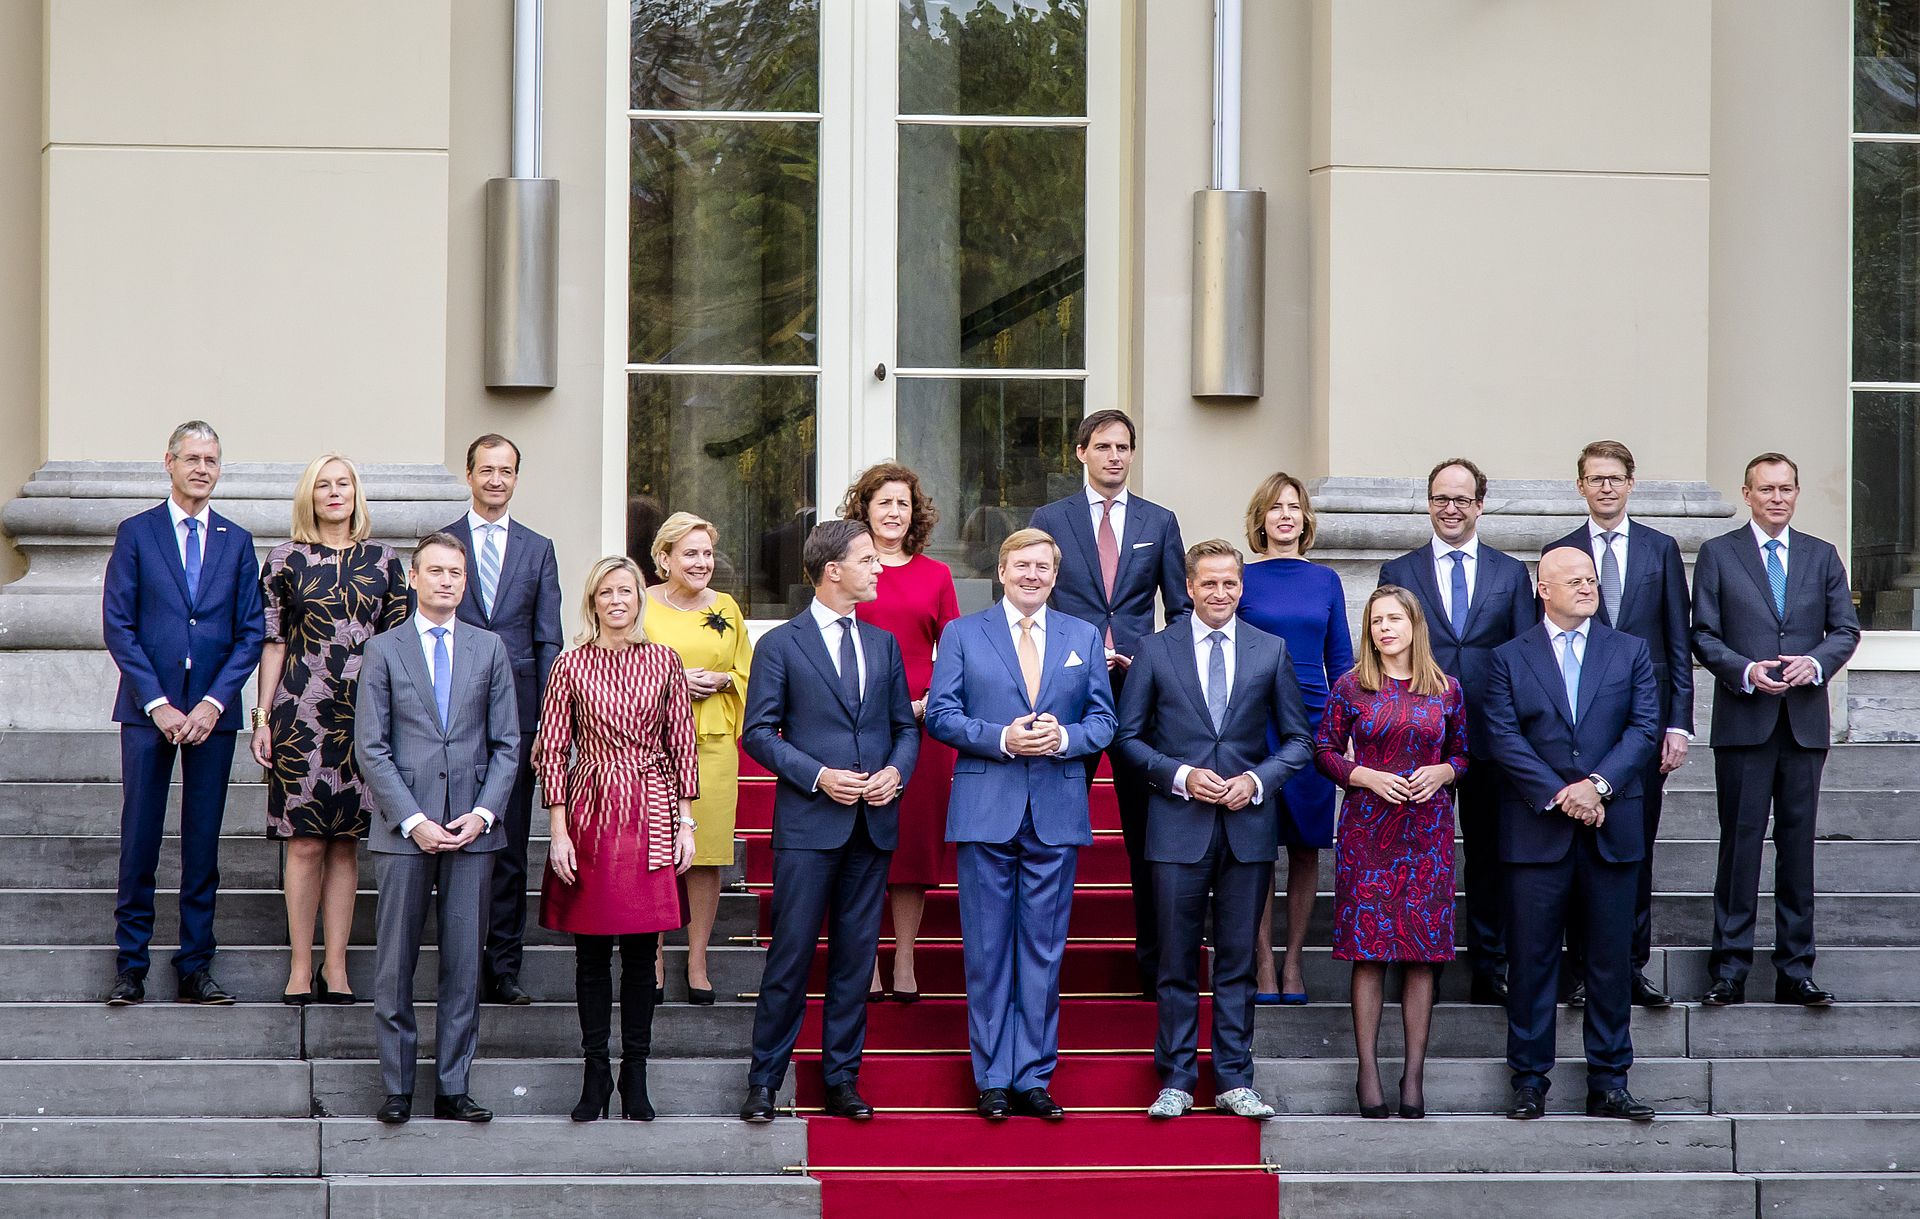 26 Oktober 2017: Kabinet Rutte III op het bordes van Paleis Noordeinde met koning Willem-Alexander.